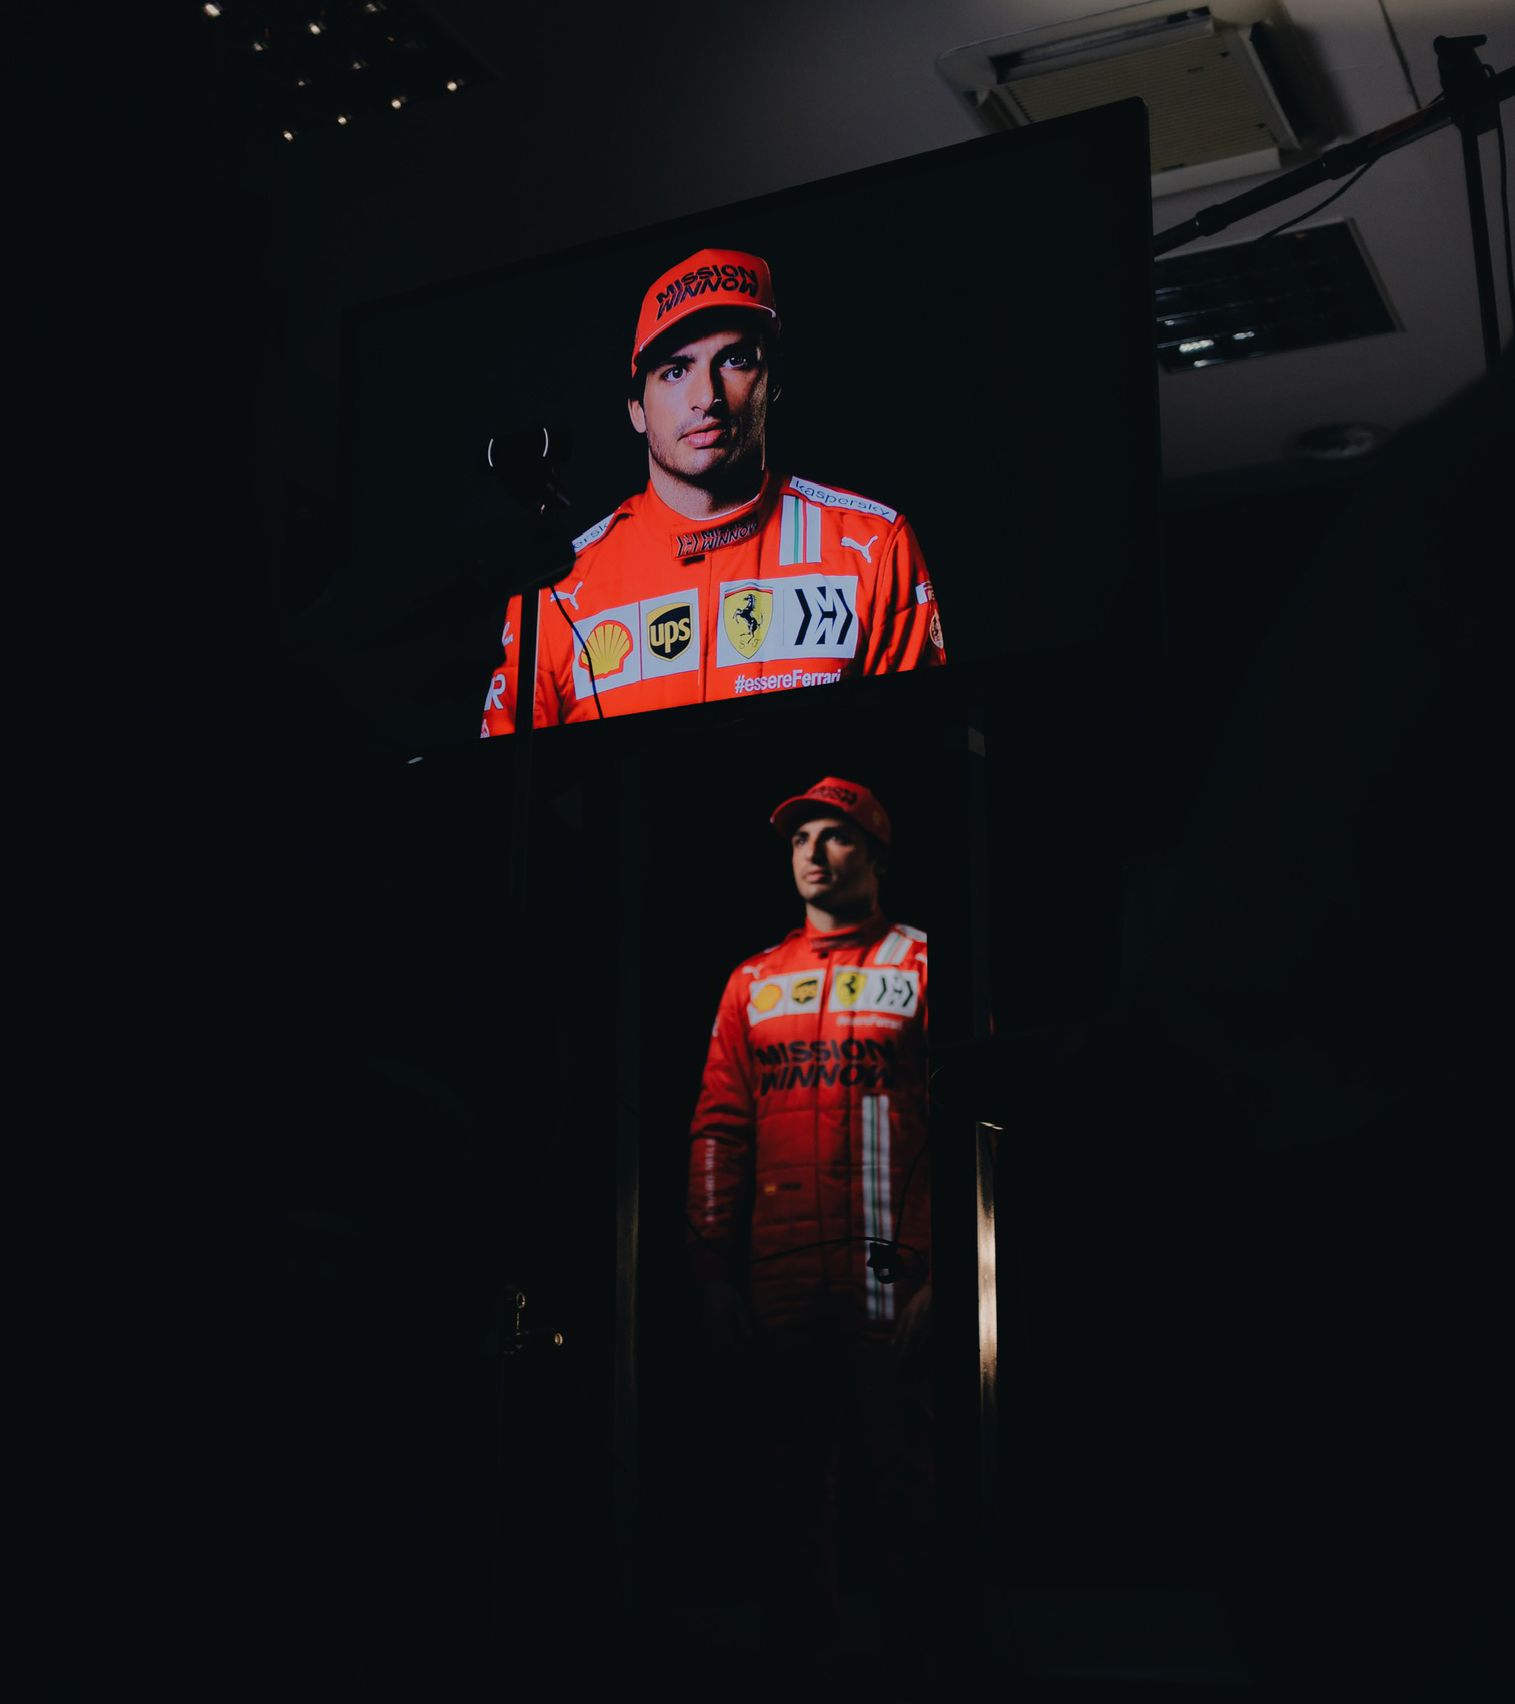  Ferrari - Charles Leclerc Et Carlos Sainz (Twitter)